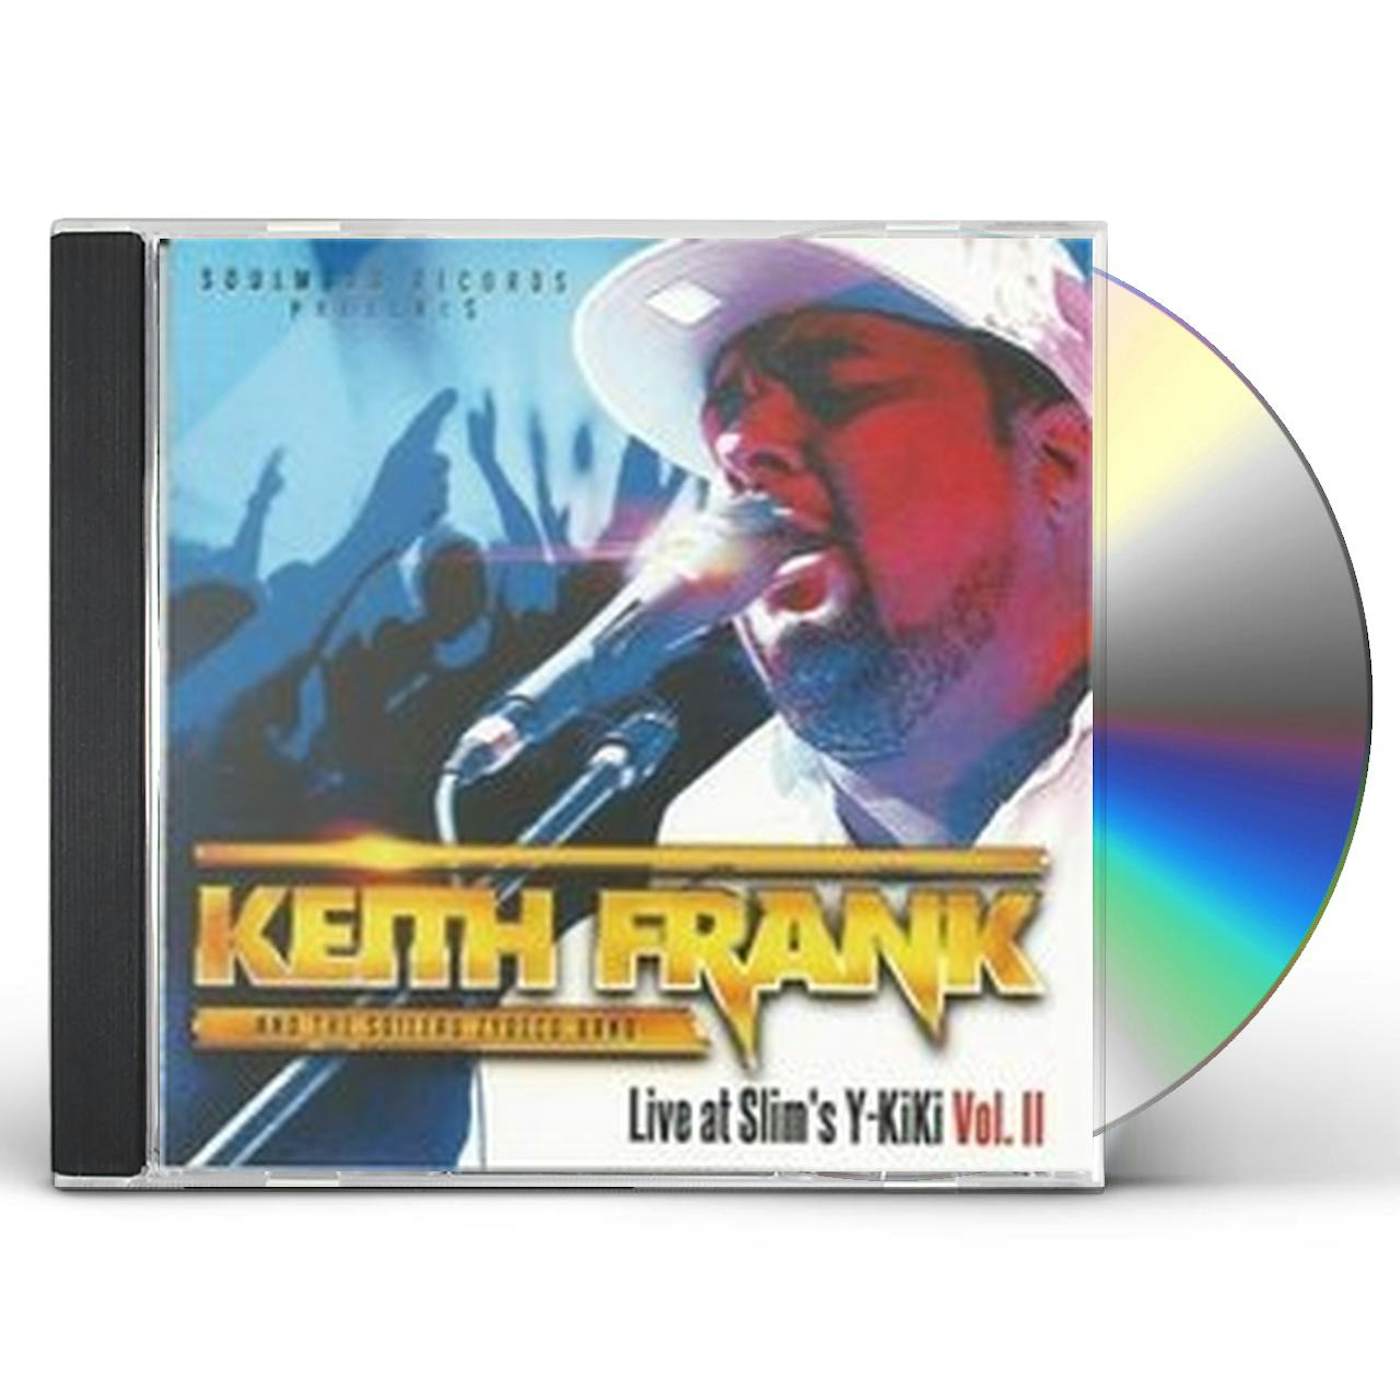 Keith Frank LIVE AT SLIMS Y KI KI VOL. II CD